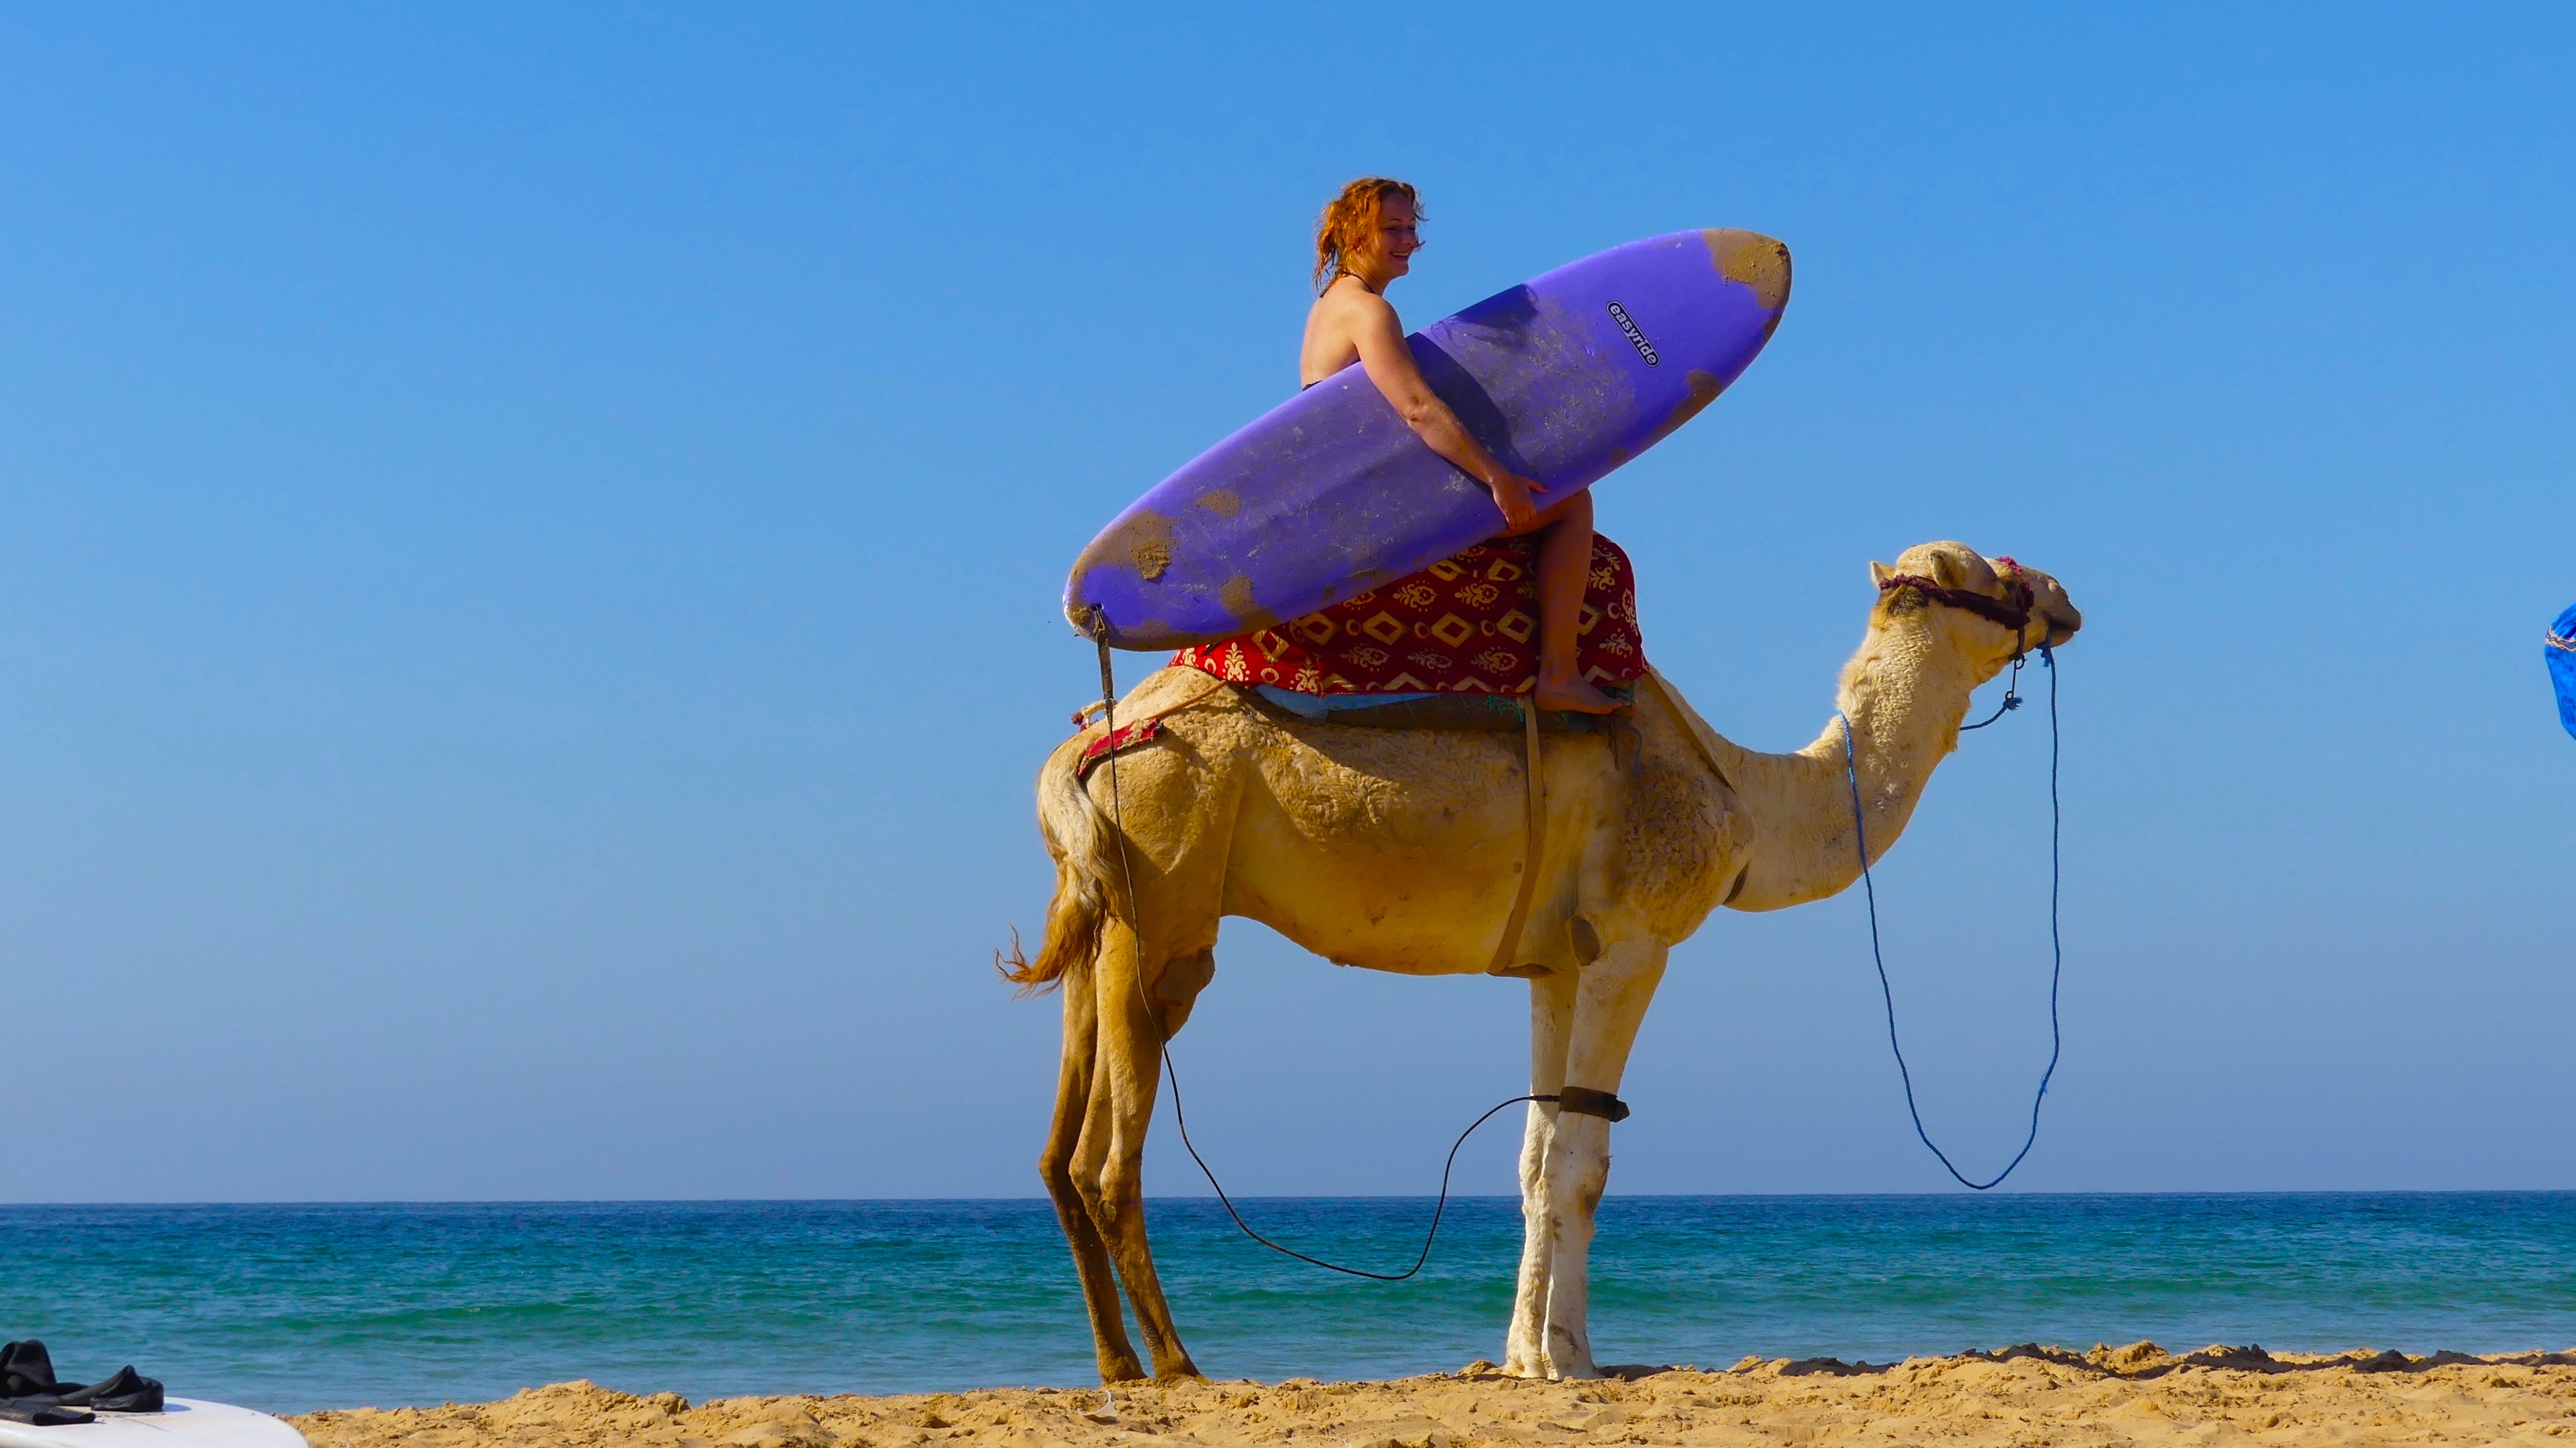 surf safari marocco